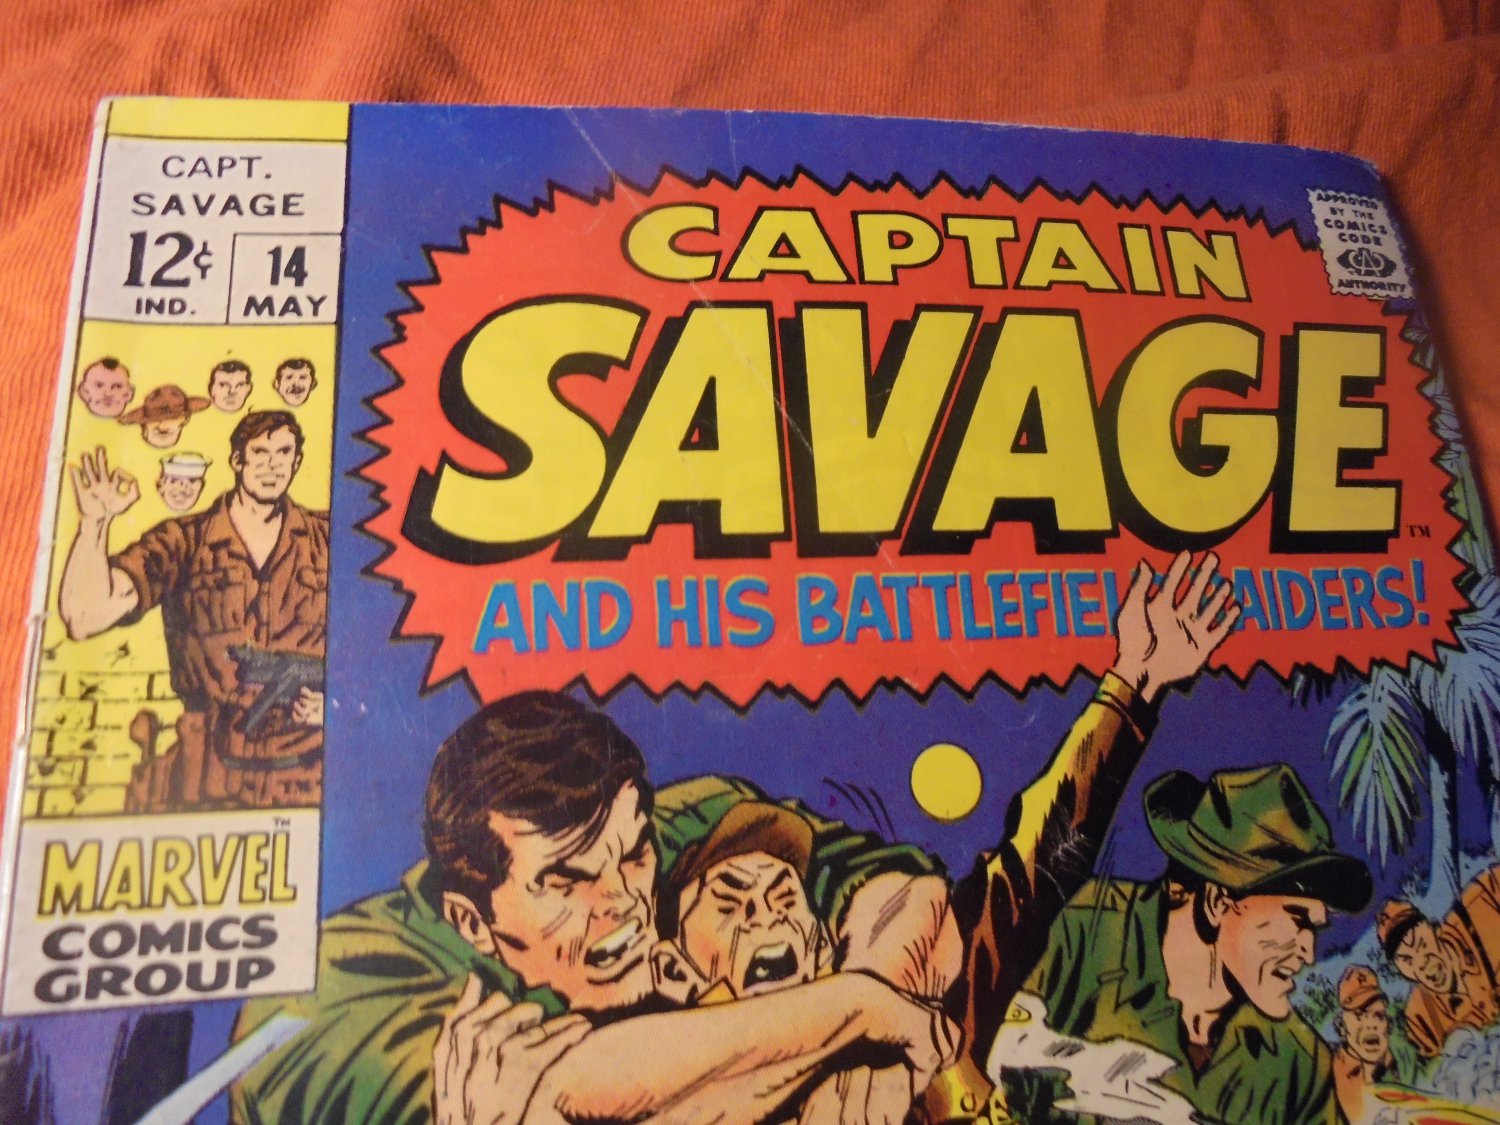 Captain Savage & His Leatherneck Raiders # 14 - May 1969 - VG/FN! Crossdressing! JFK! $7.00 OBO!